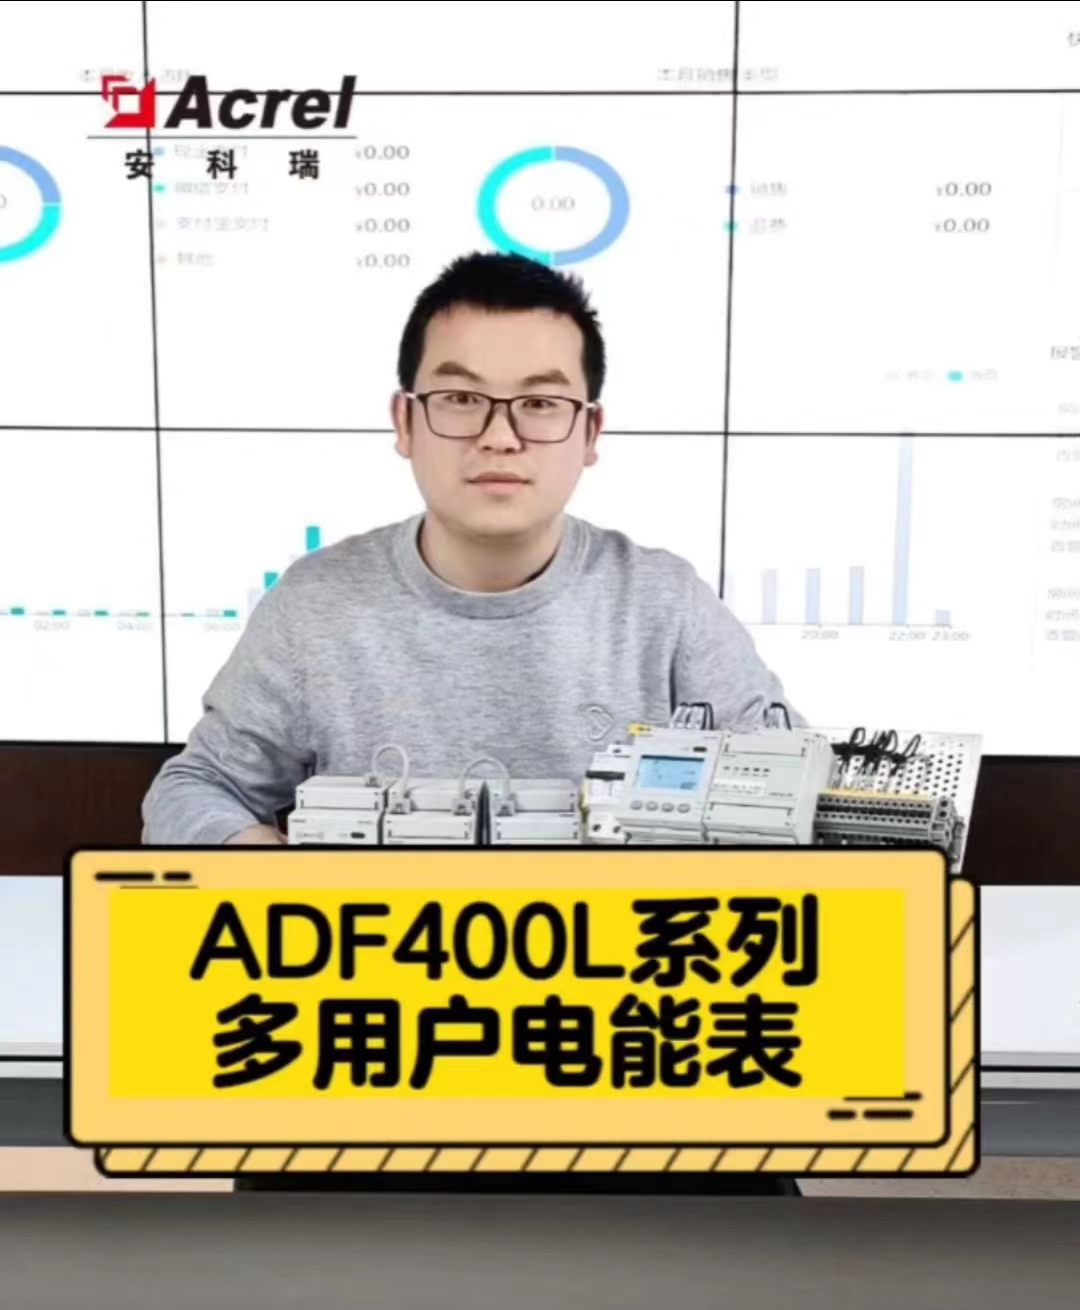 ADF400L系列多用户电能表预付费电表模块化组合，可实现12路三相或36路单相或混相集中安装、集中管理、安装